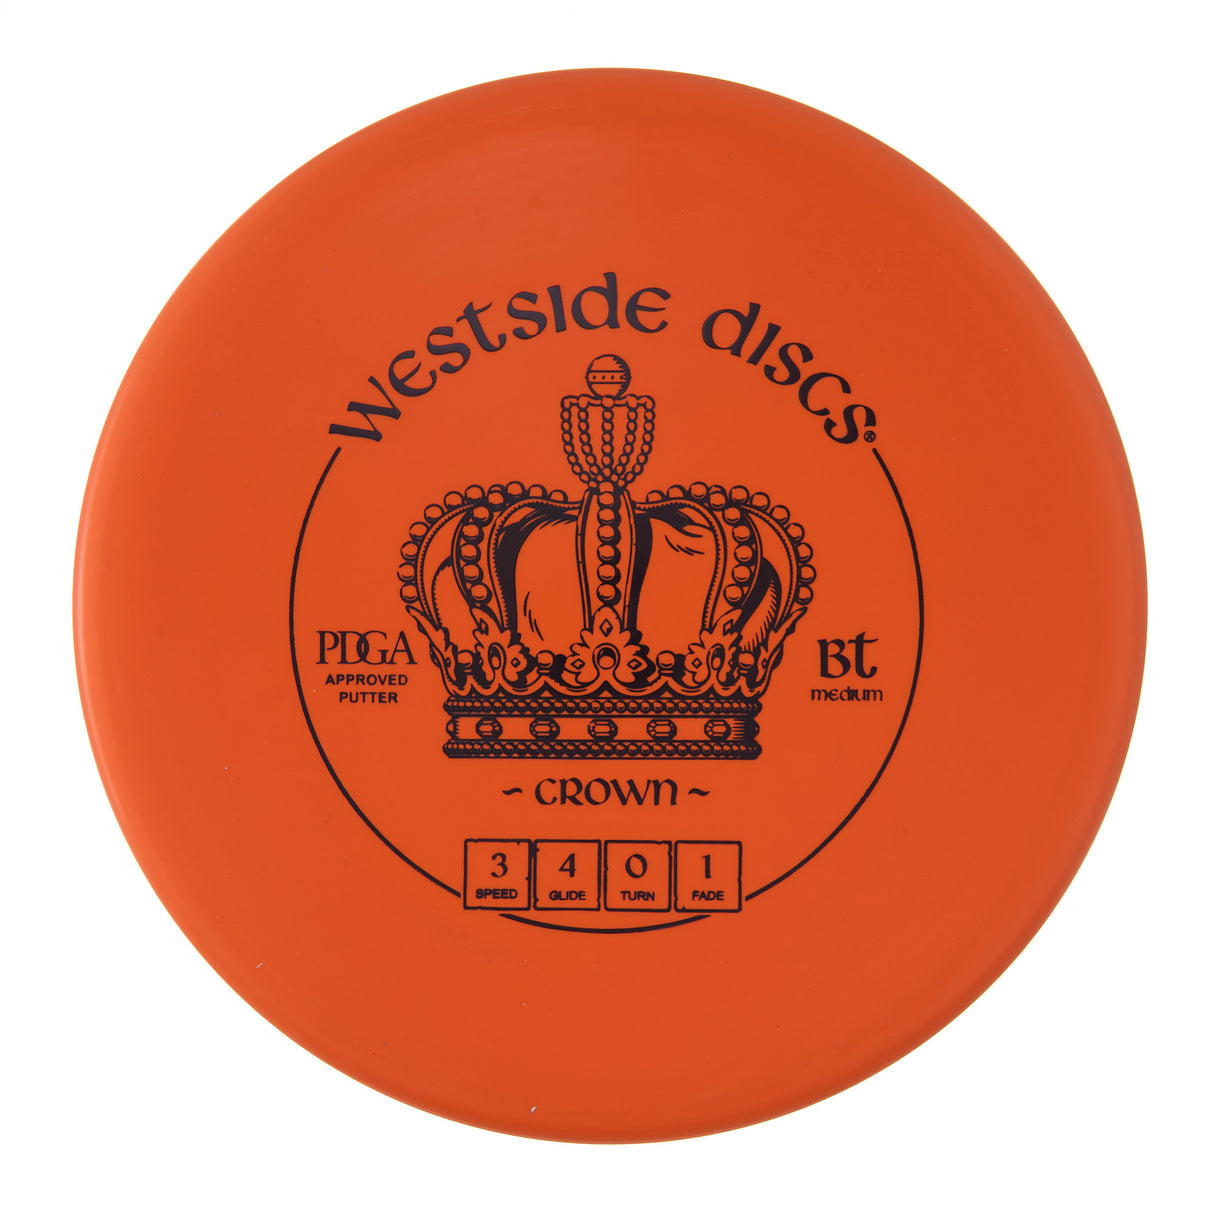 Westside Crown - BT Medium 174g | Style 0010